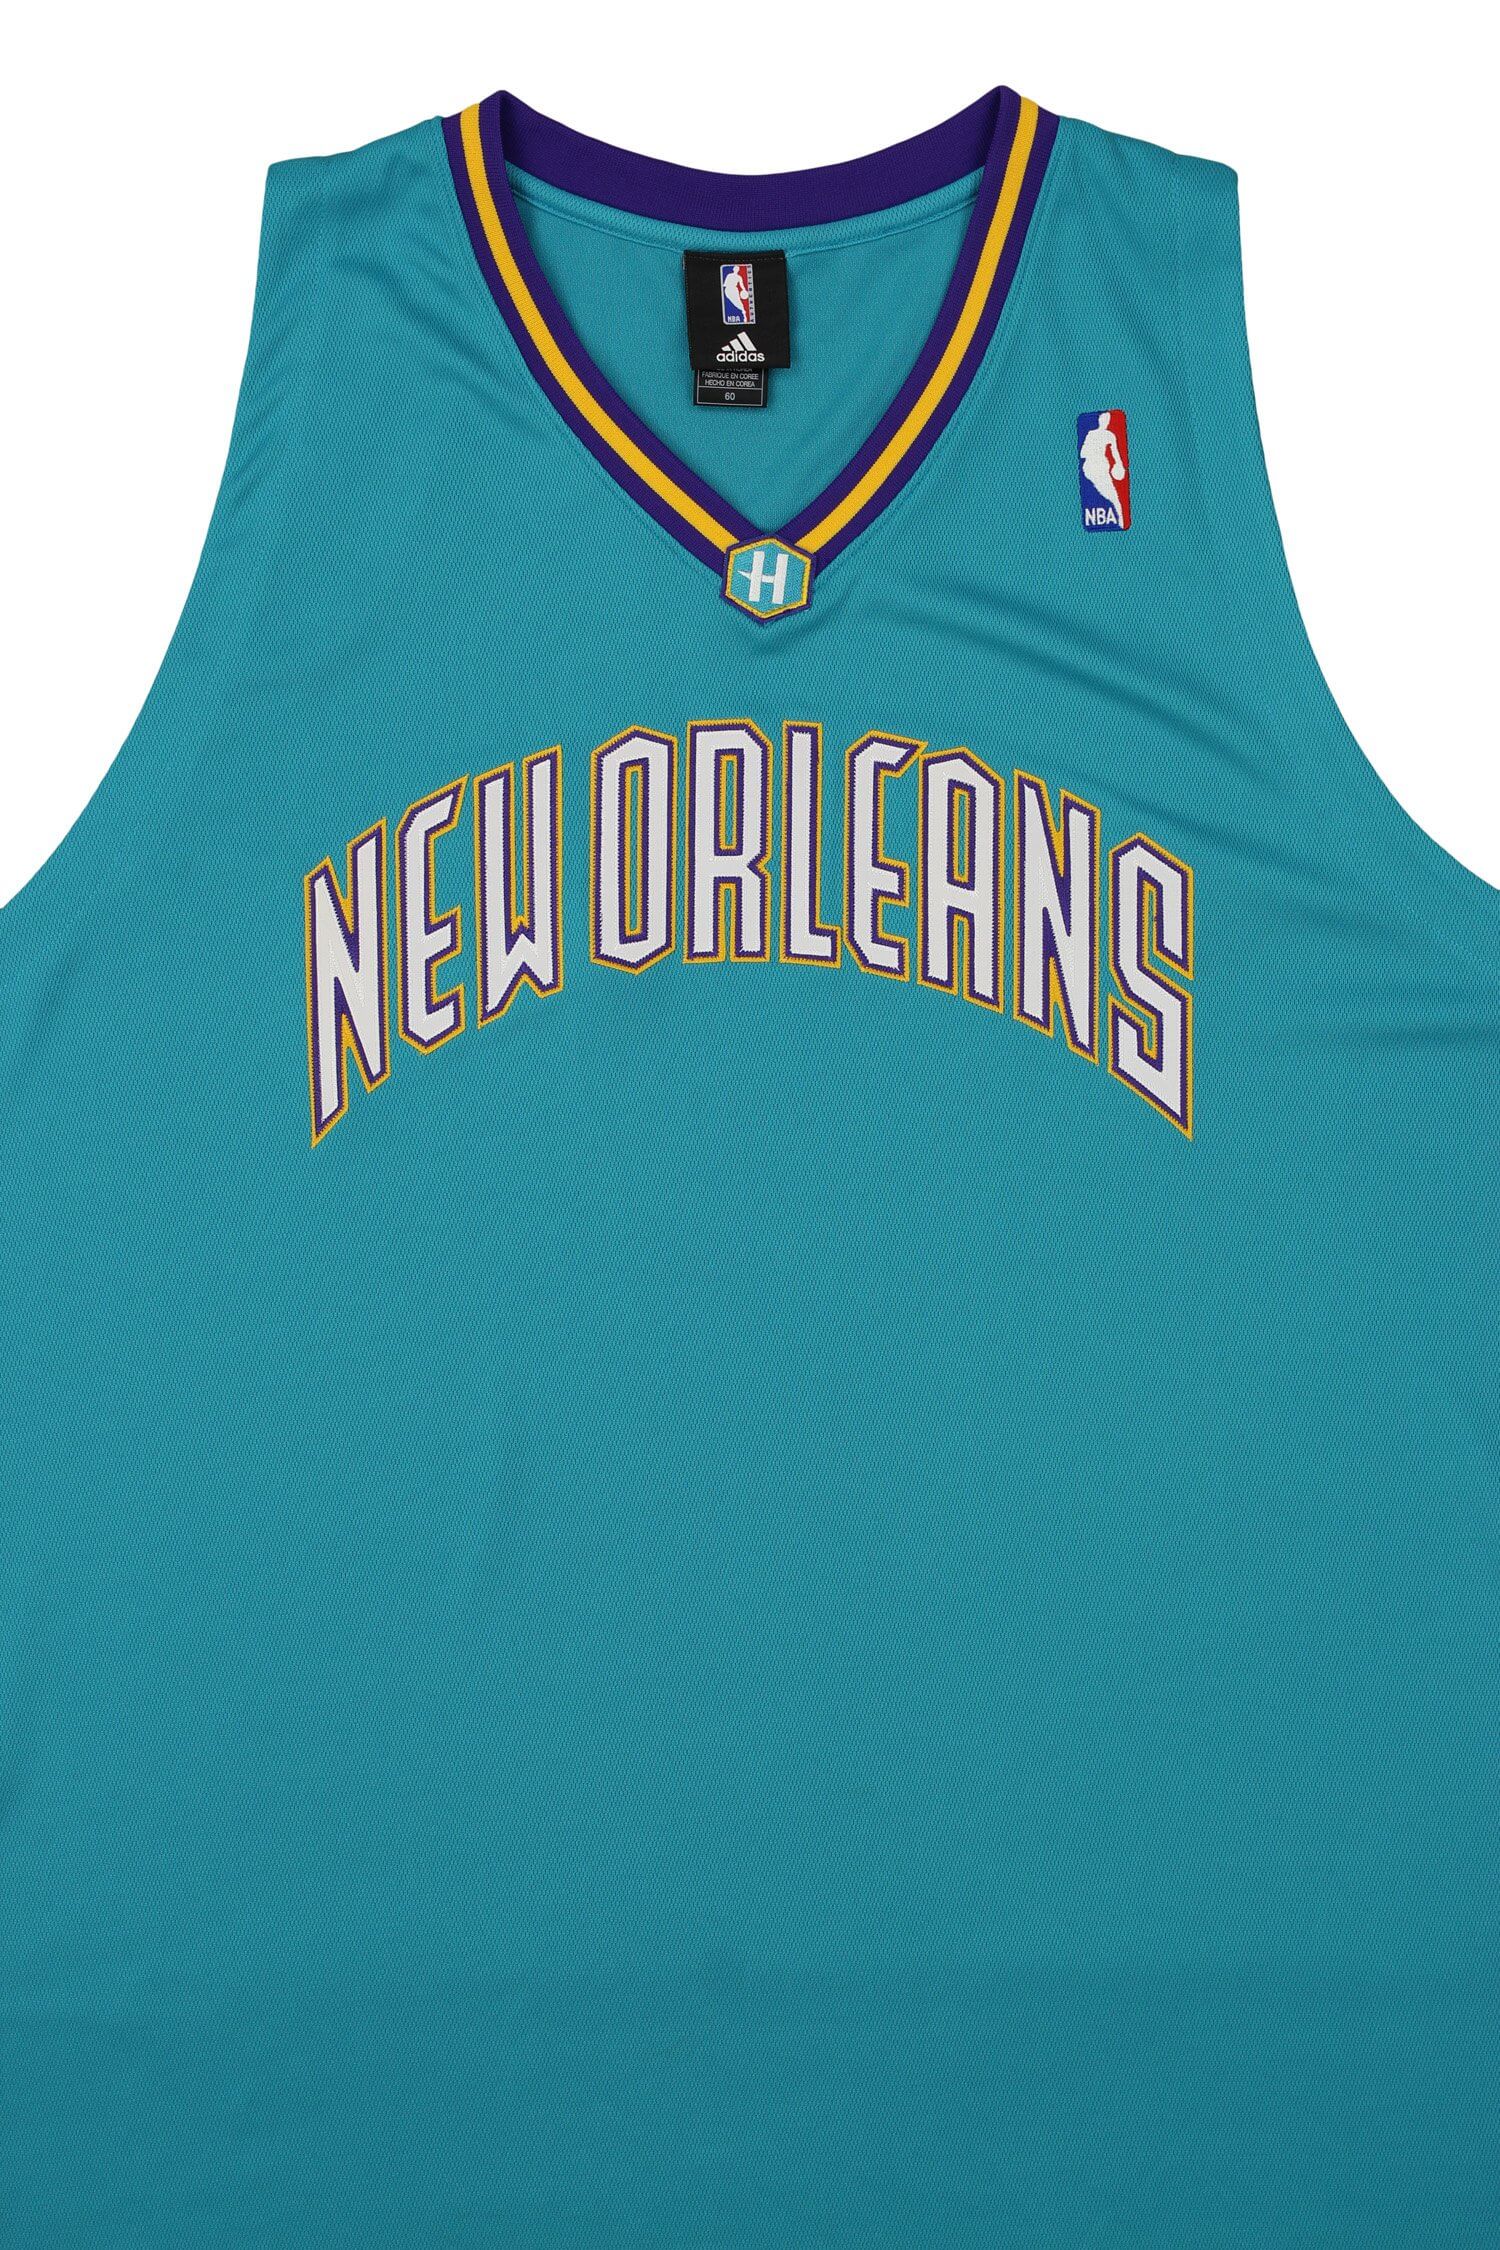 Reebok New Orleans Hornets NBA Jerseys for sale